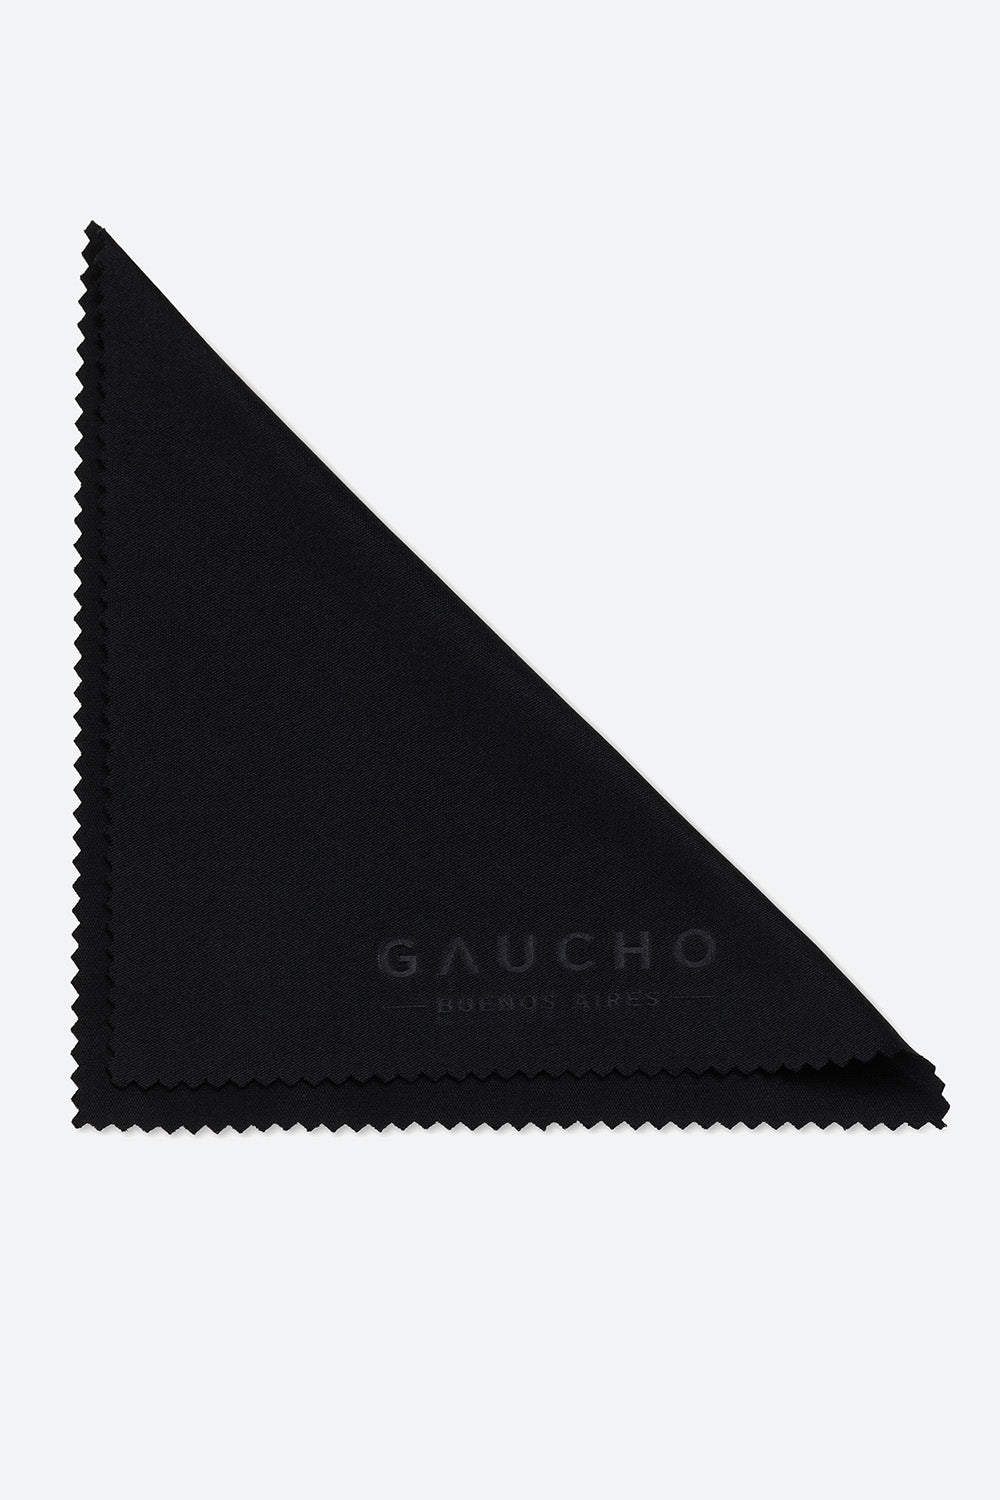 Gaucho Sunglasses in Black